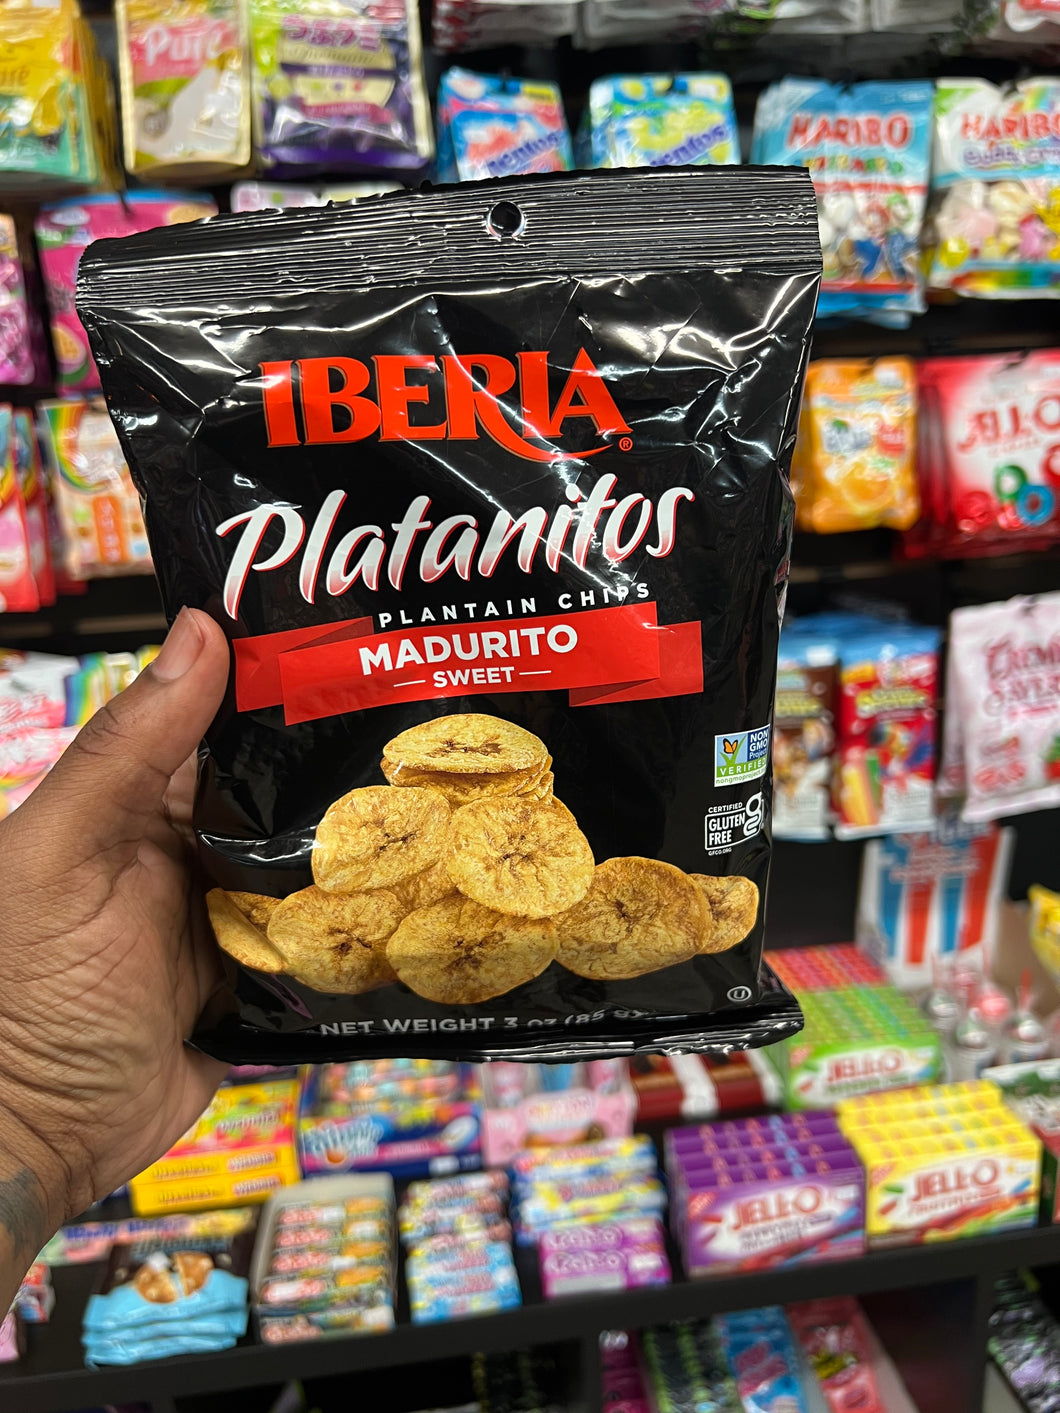 Iberia Platanitos Madurtio Sweet Chips (Peru)